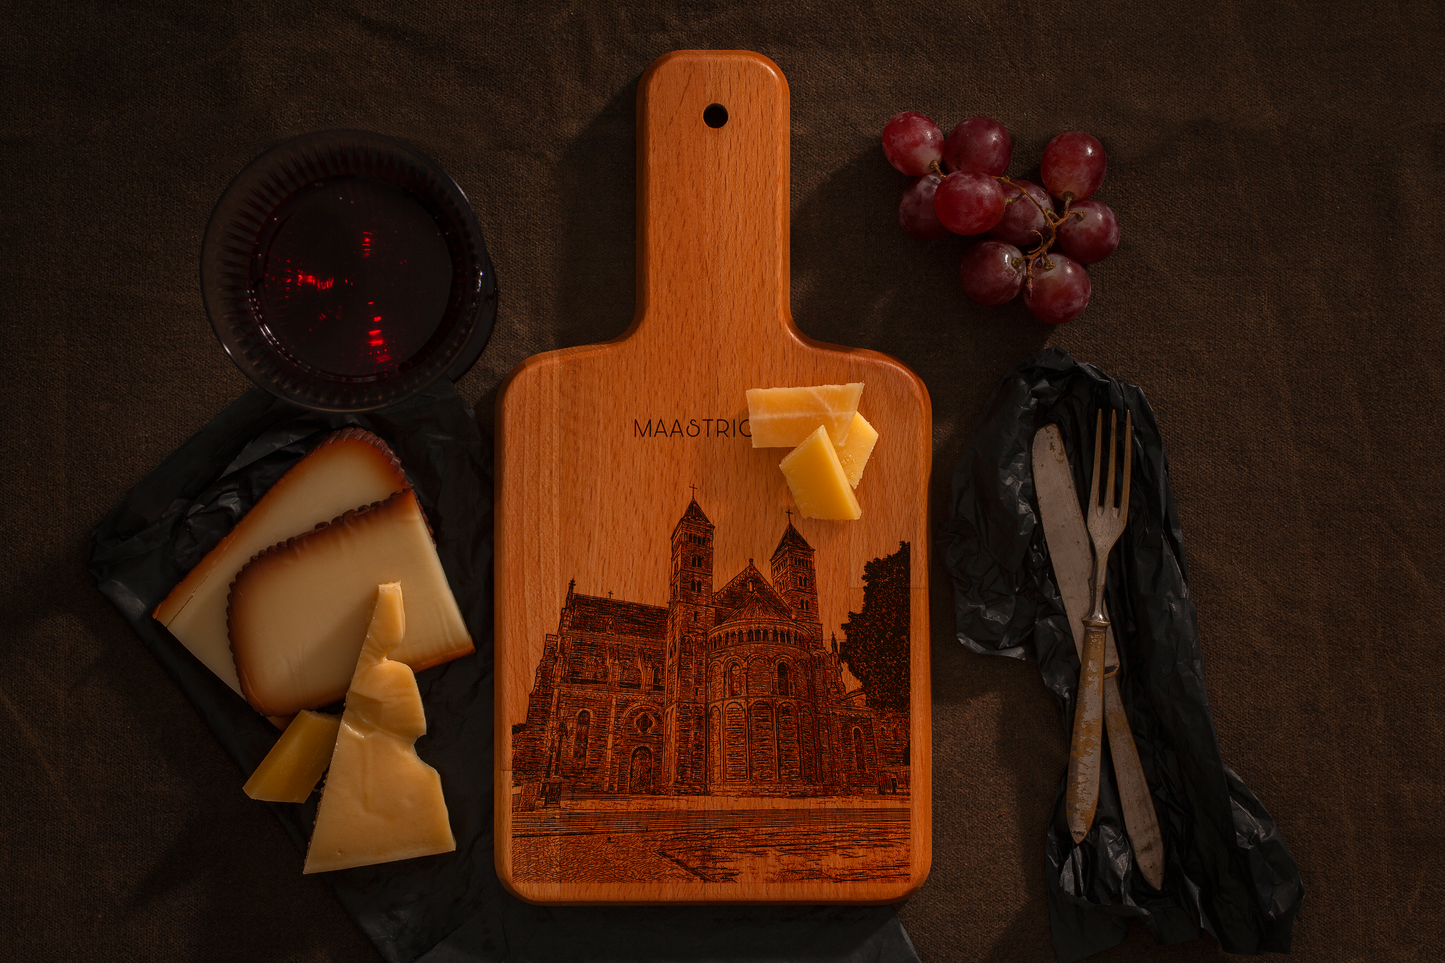 Maastricht, Basiliek Van Sint Servaas, cheese board, with cheese